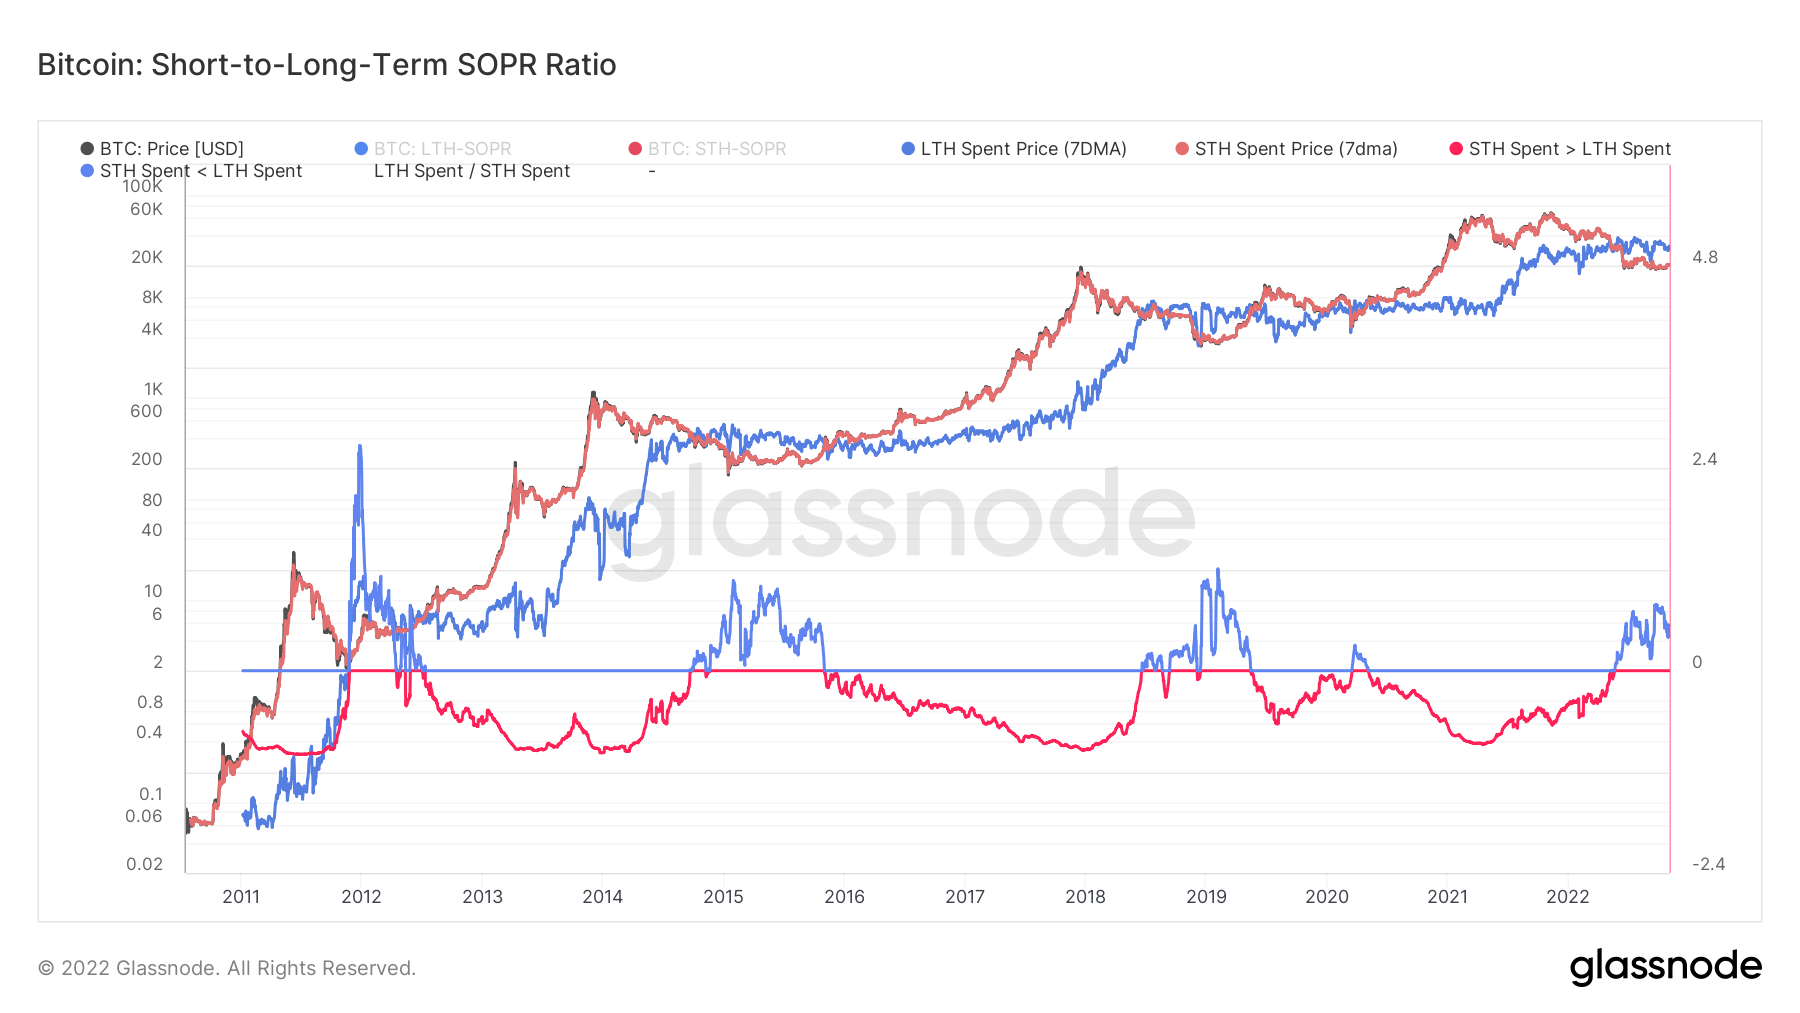 BTC Short to long-term SOPR ratio